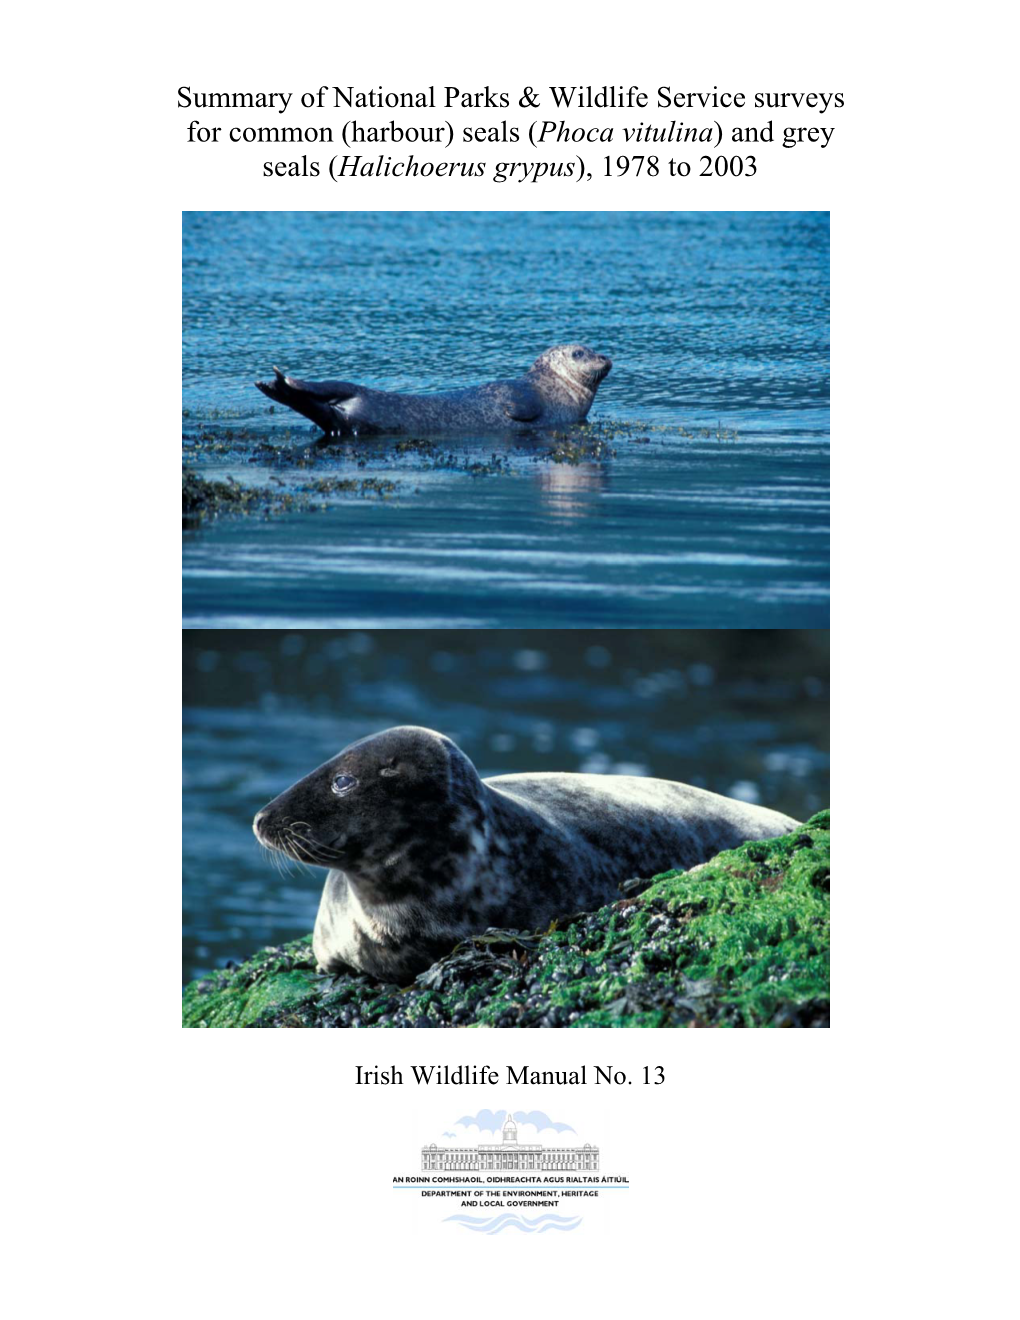 (Harbour) Seals (Phoca Vitulina) and Grey Seals (Halichoerus Grypus), 1978 to 2003